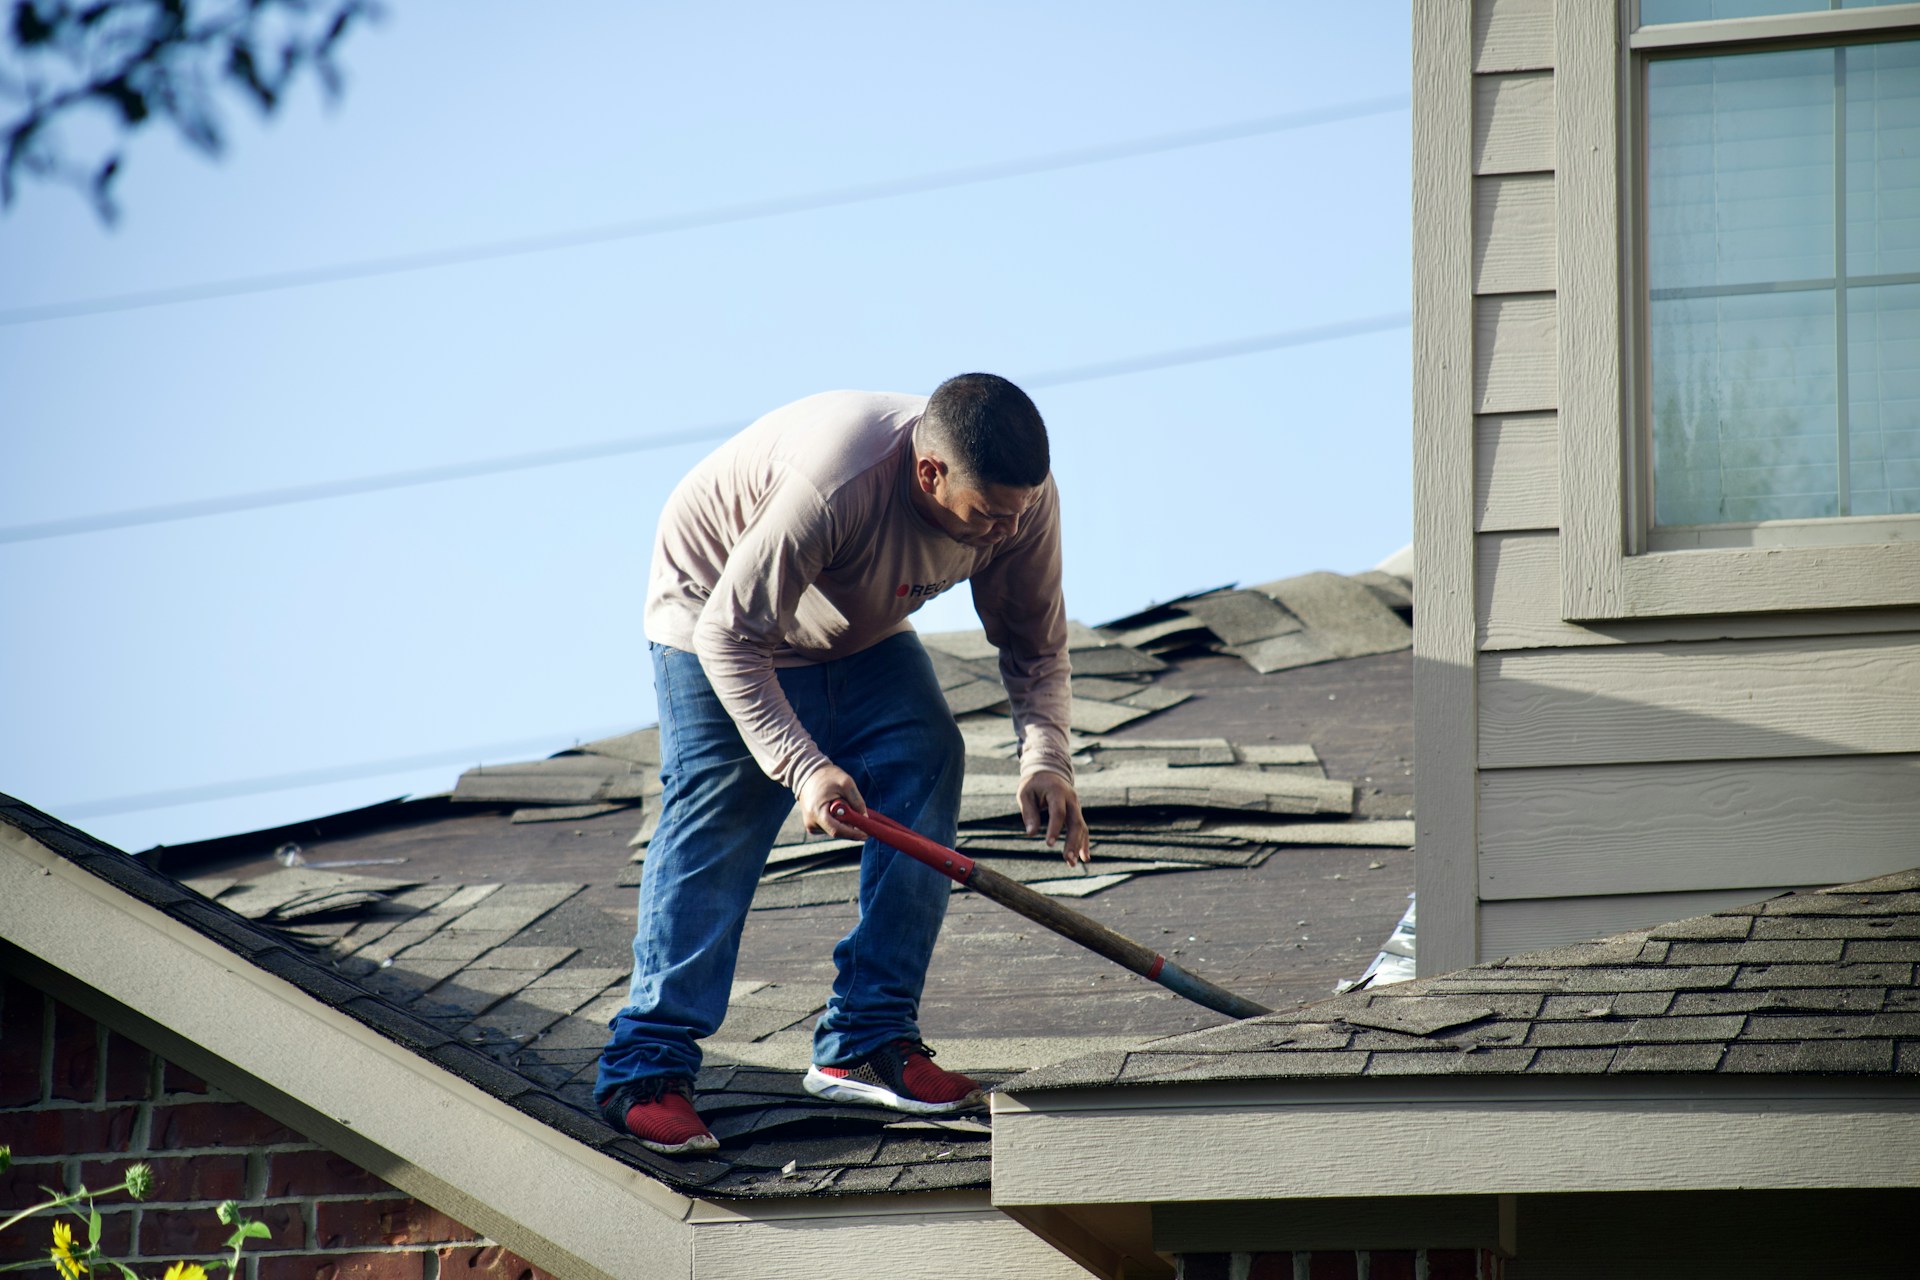 Roofer, removing roof shingles. Image by Unsplash